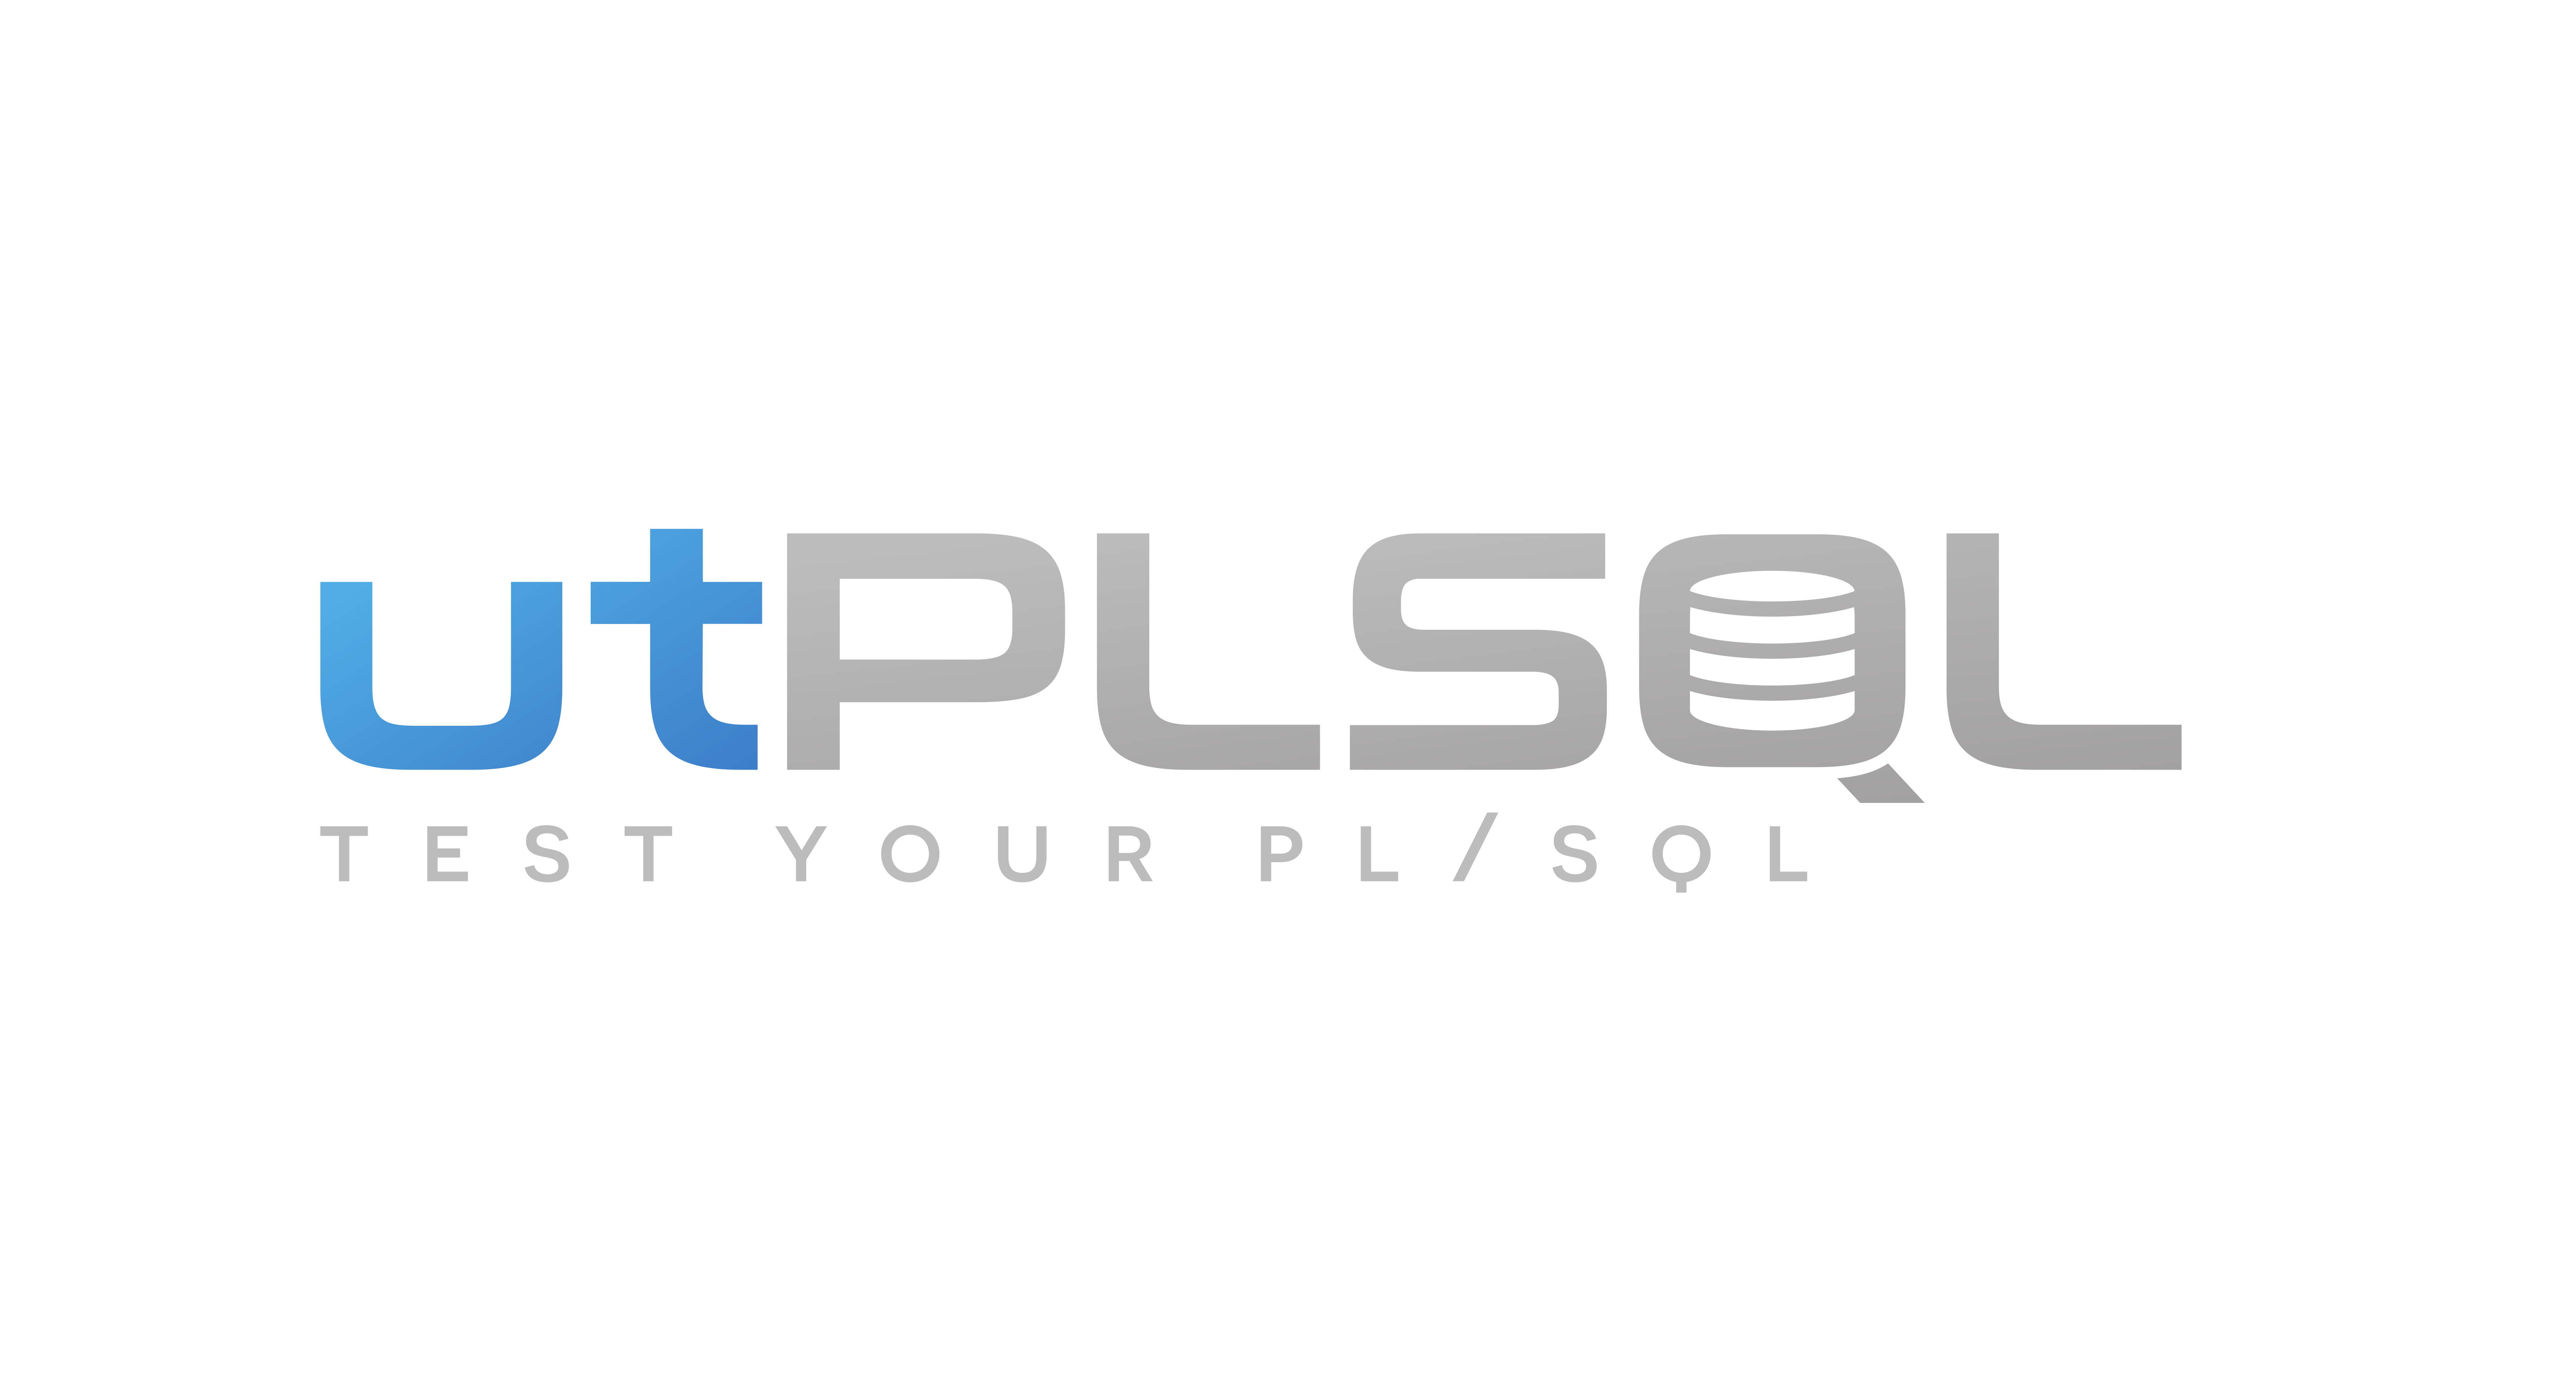 utPLSQL-test-your-plsql-white.png